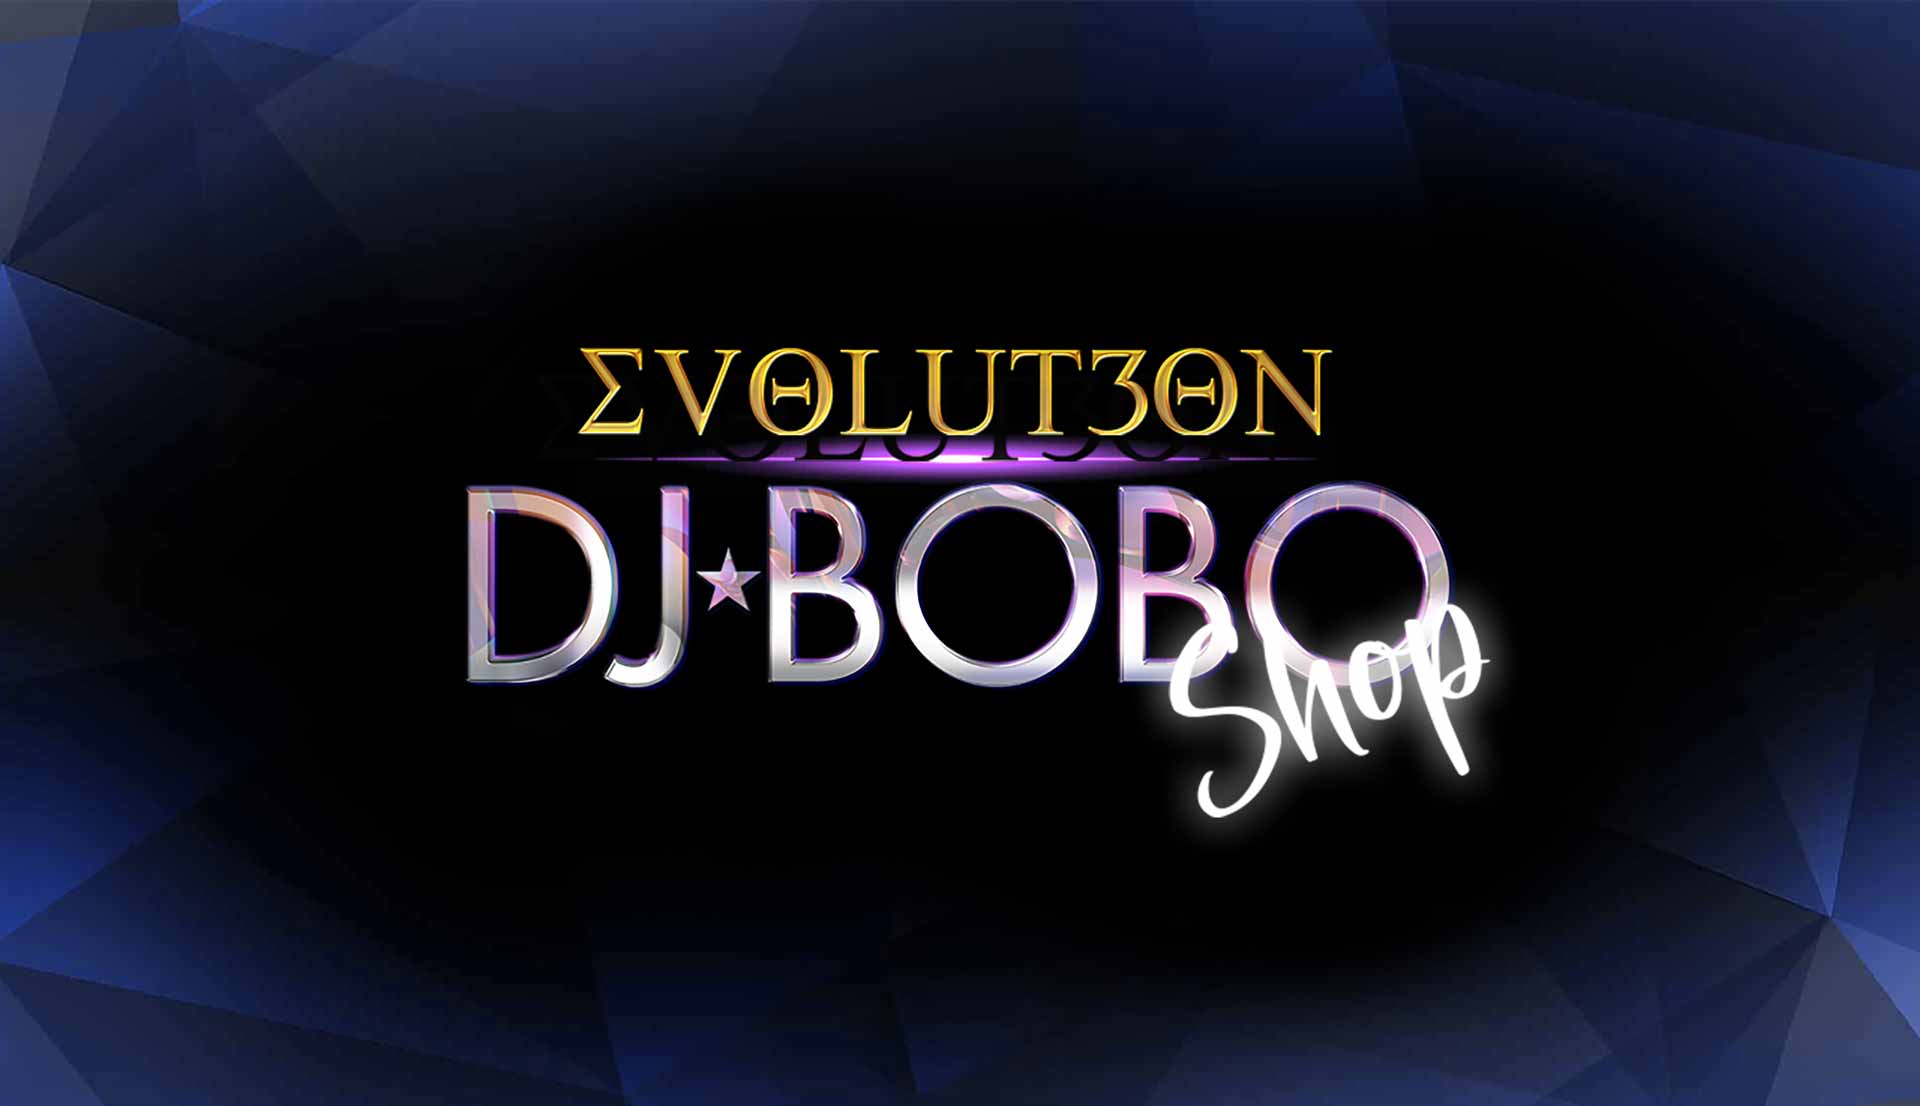 DJ BoBo Merchandise Shop